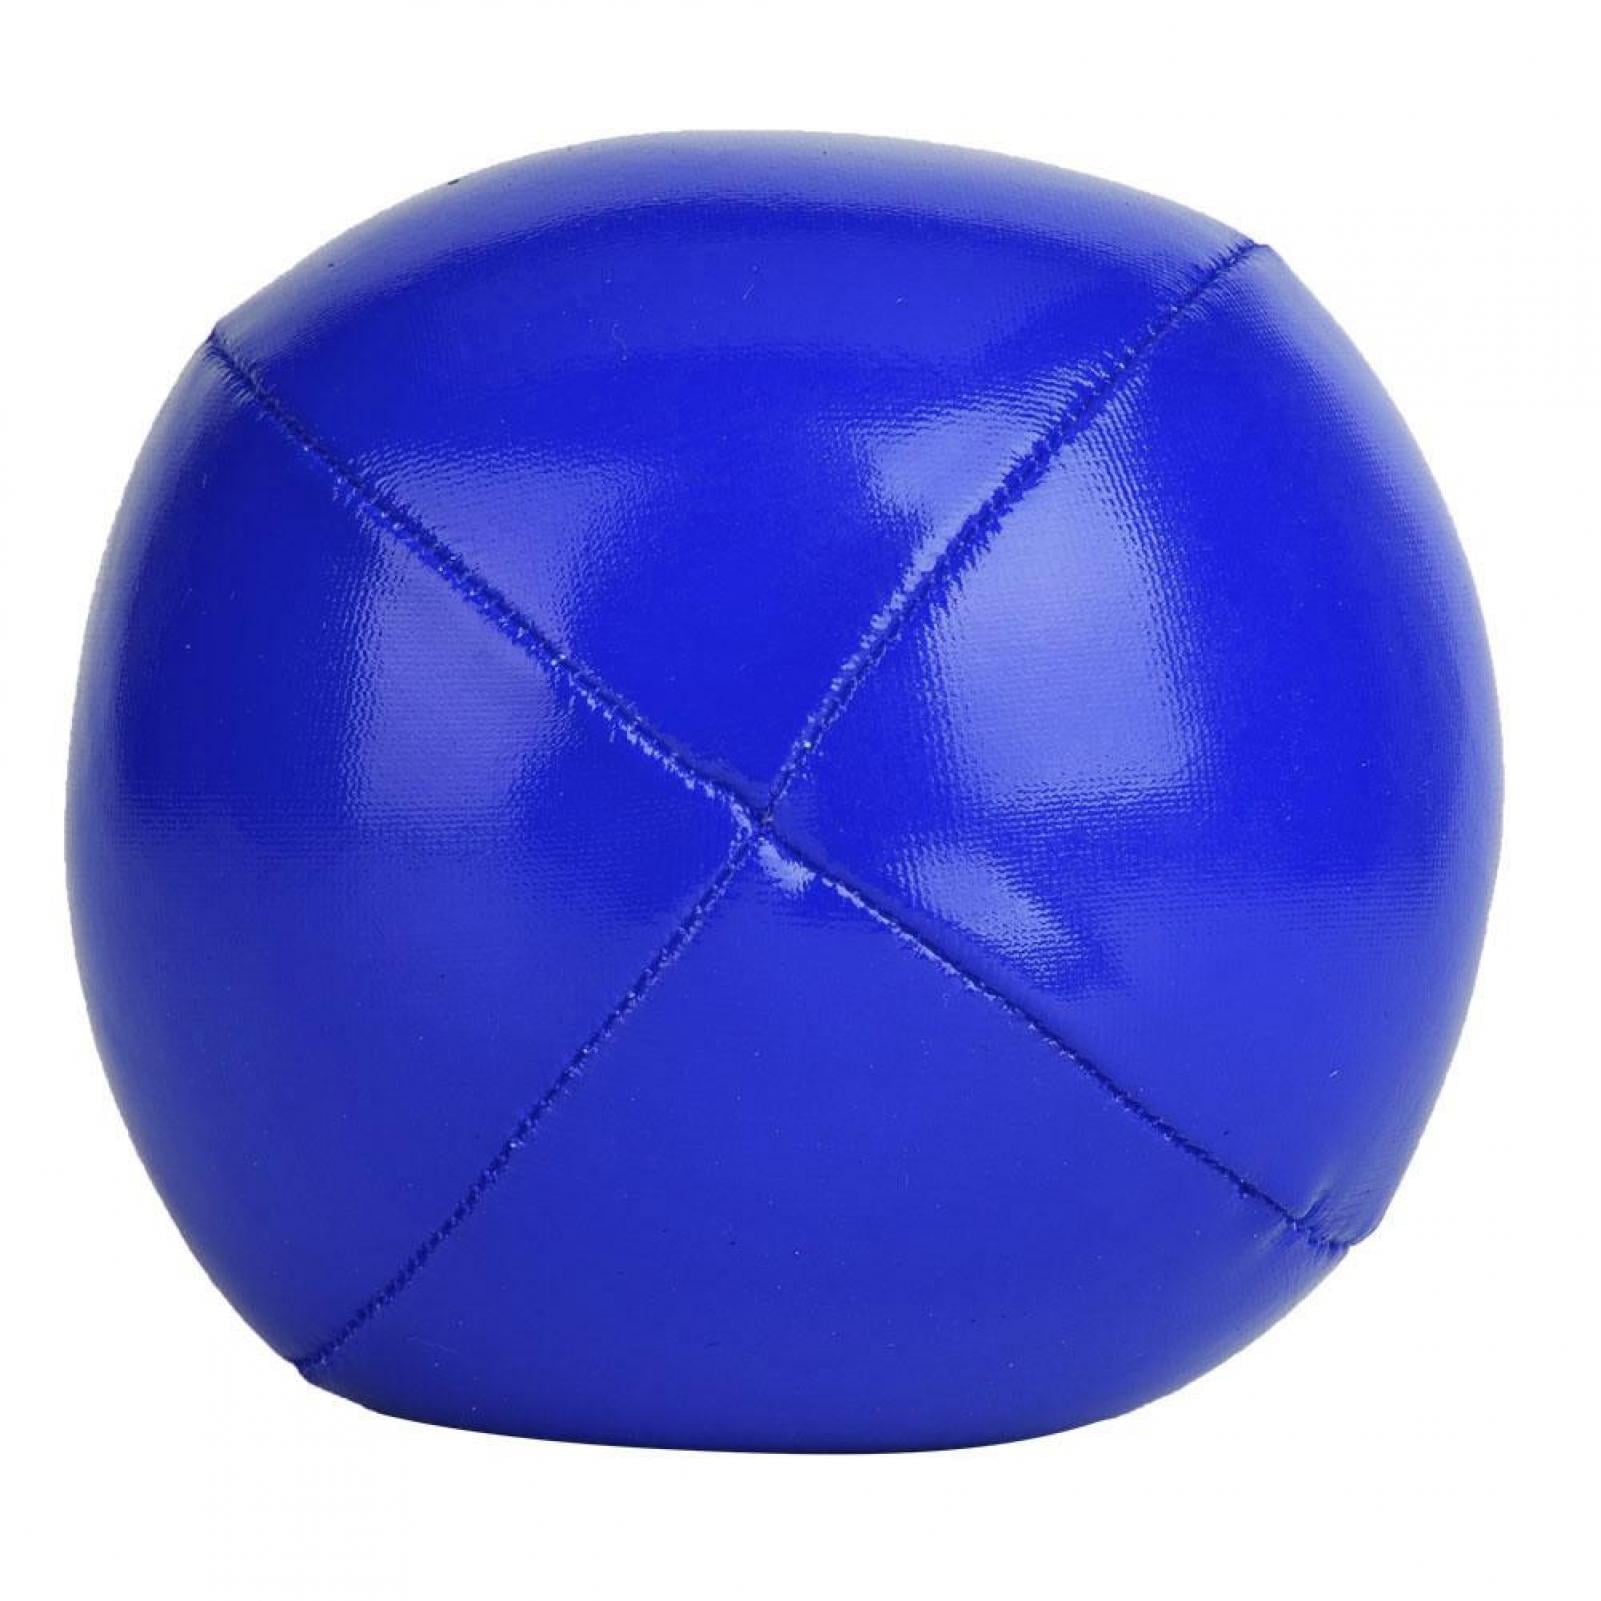 Professional Juggling Ball Juggling Balls Clown Juggle Ball Set for Beginner&Professionals Blue 3 pcs PU Juggling Ball Set